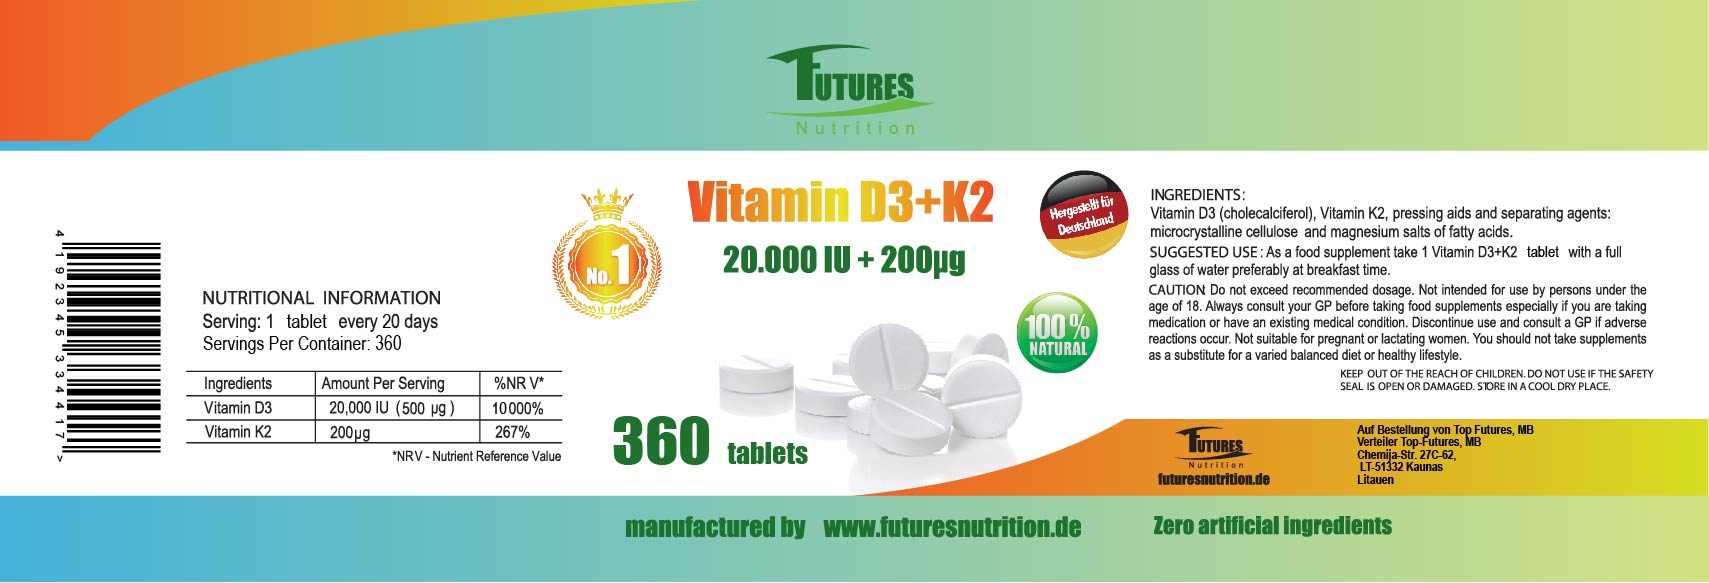 5 x Vitamina D3 + K2 MK7 20.000 IE + 200 μg Tutti trans